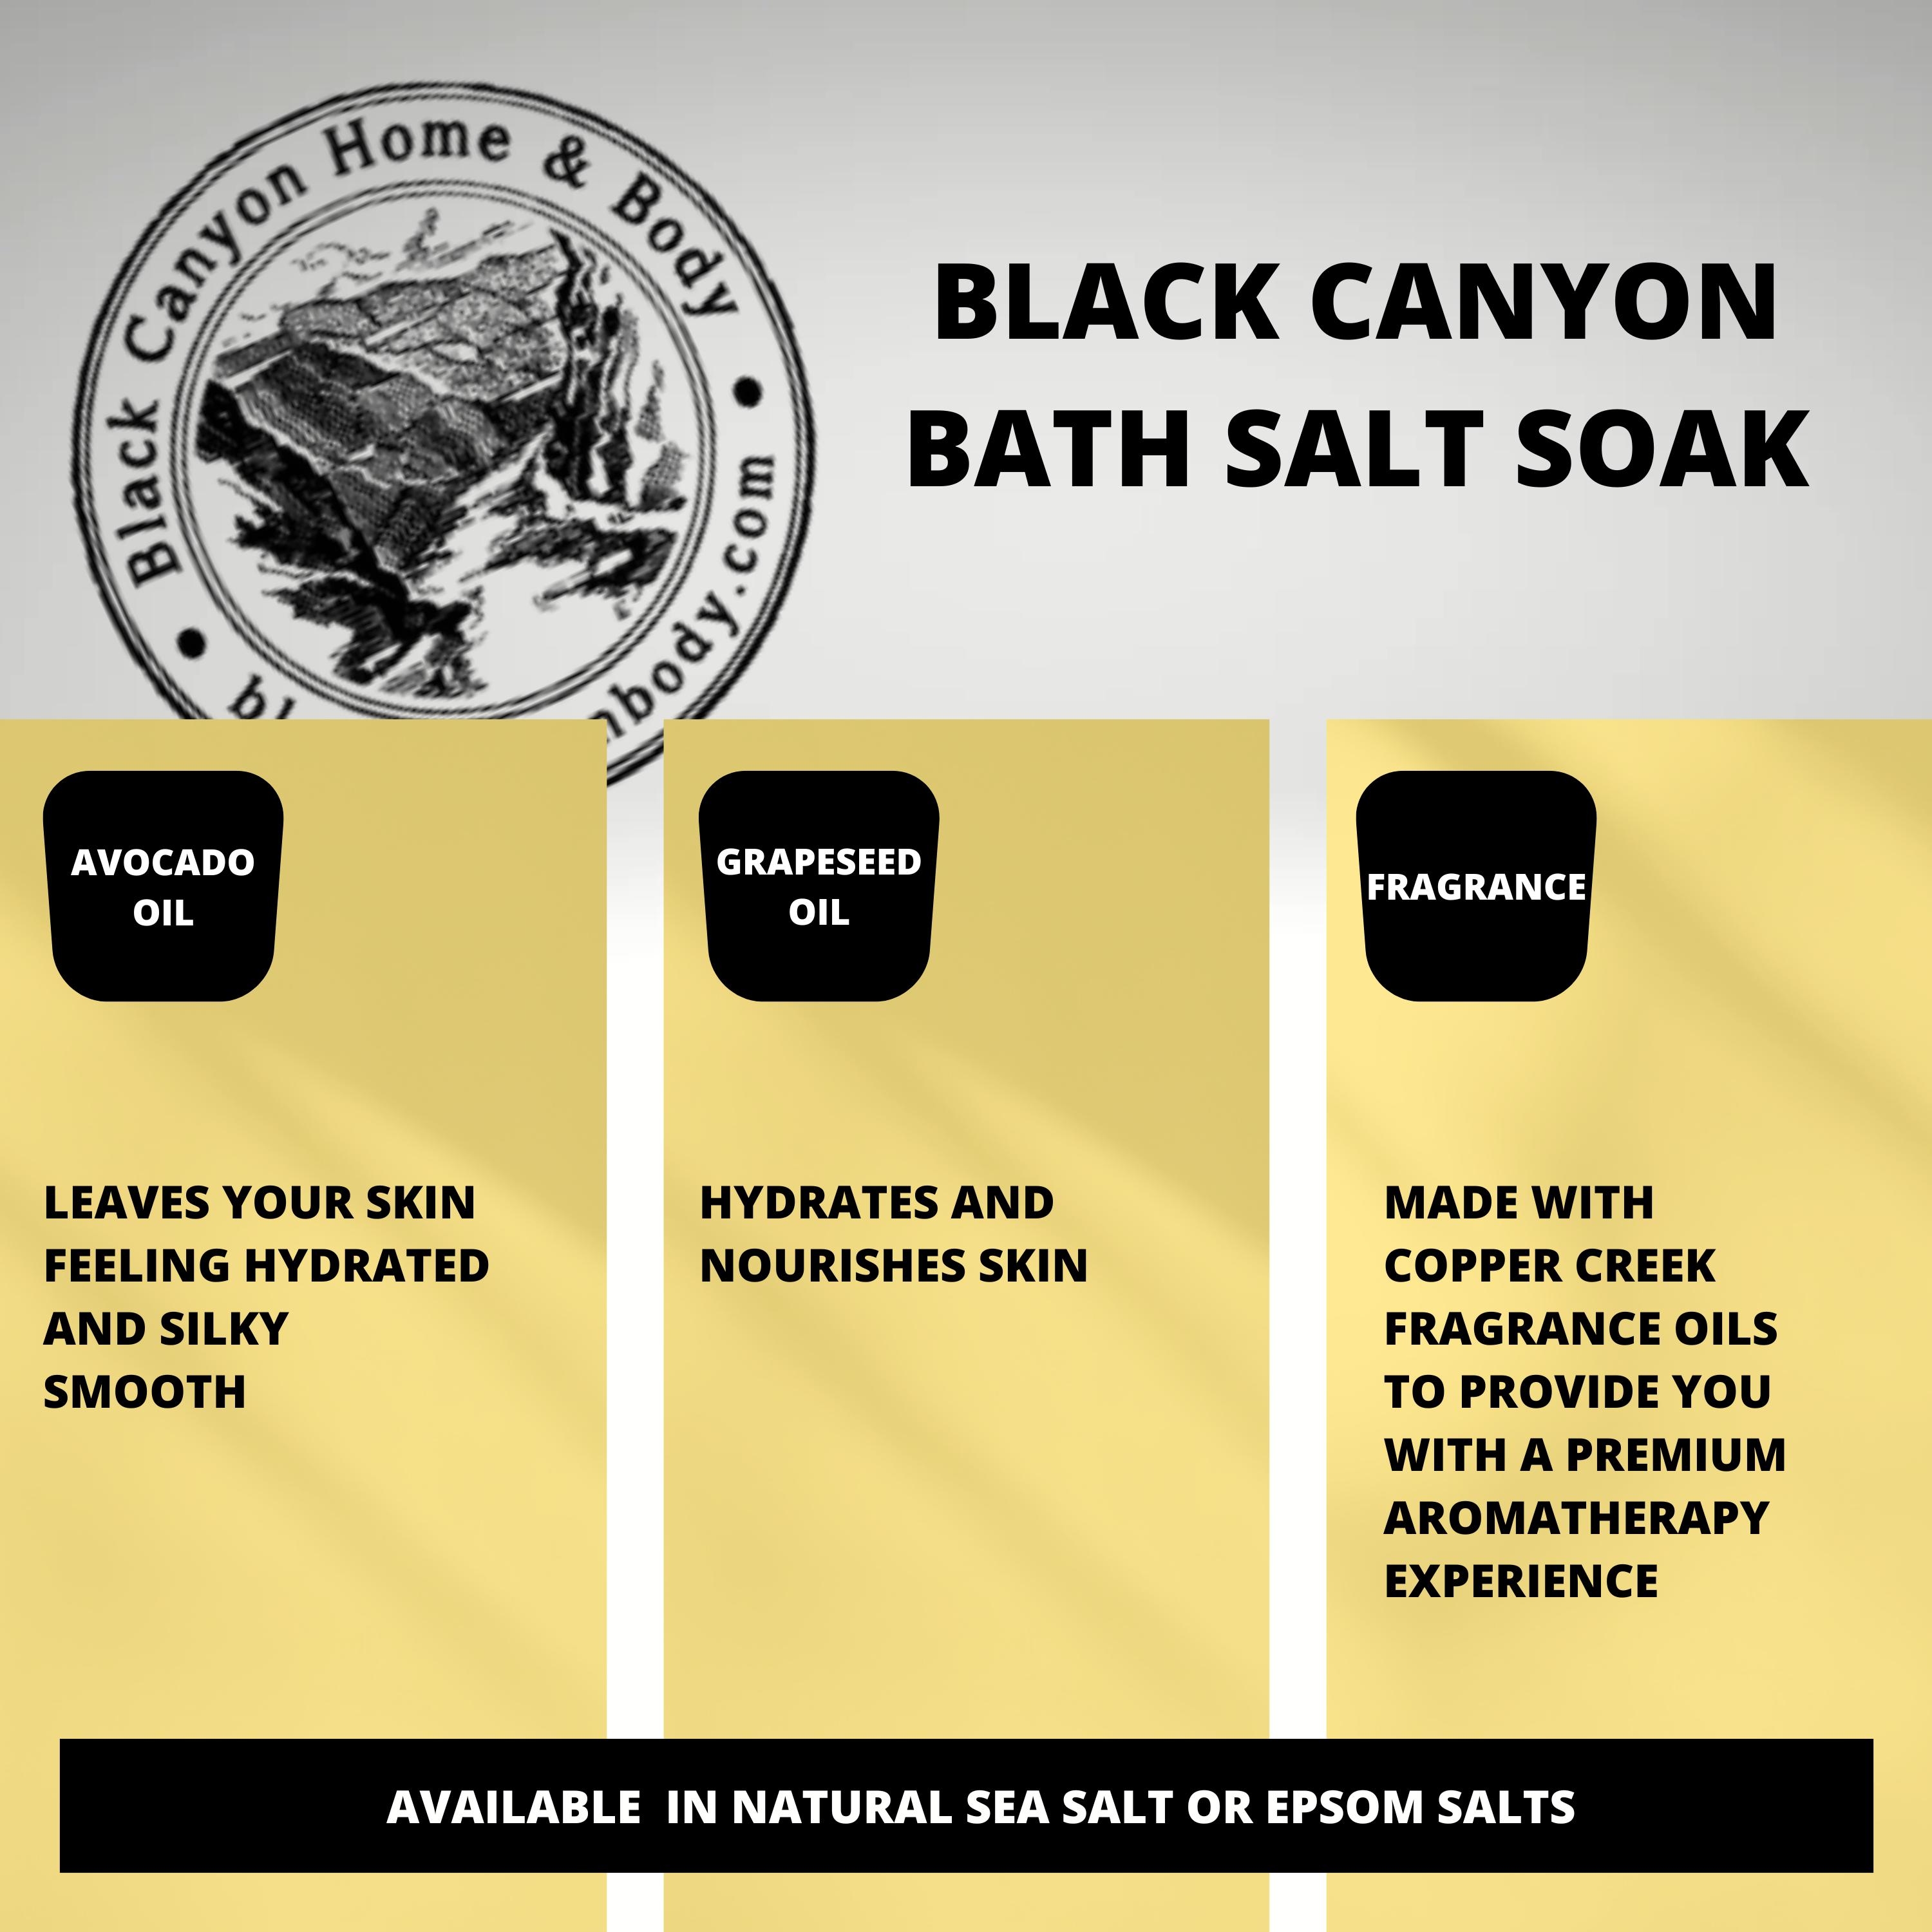 Black Canyon Autumn Dreams Scented Sea Salt Bath Soak